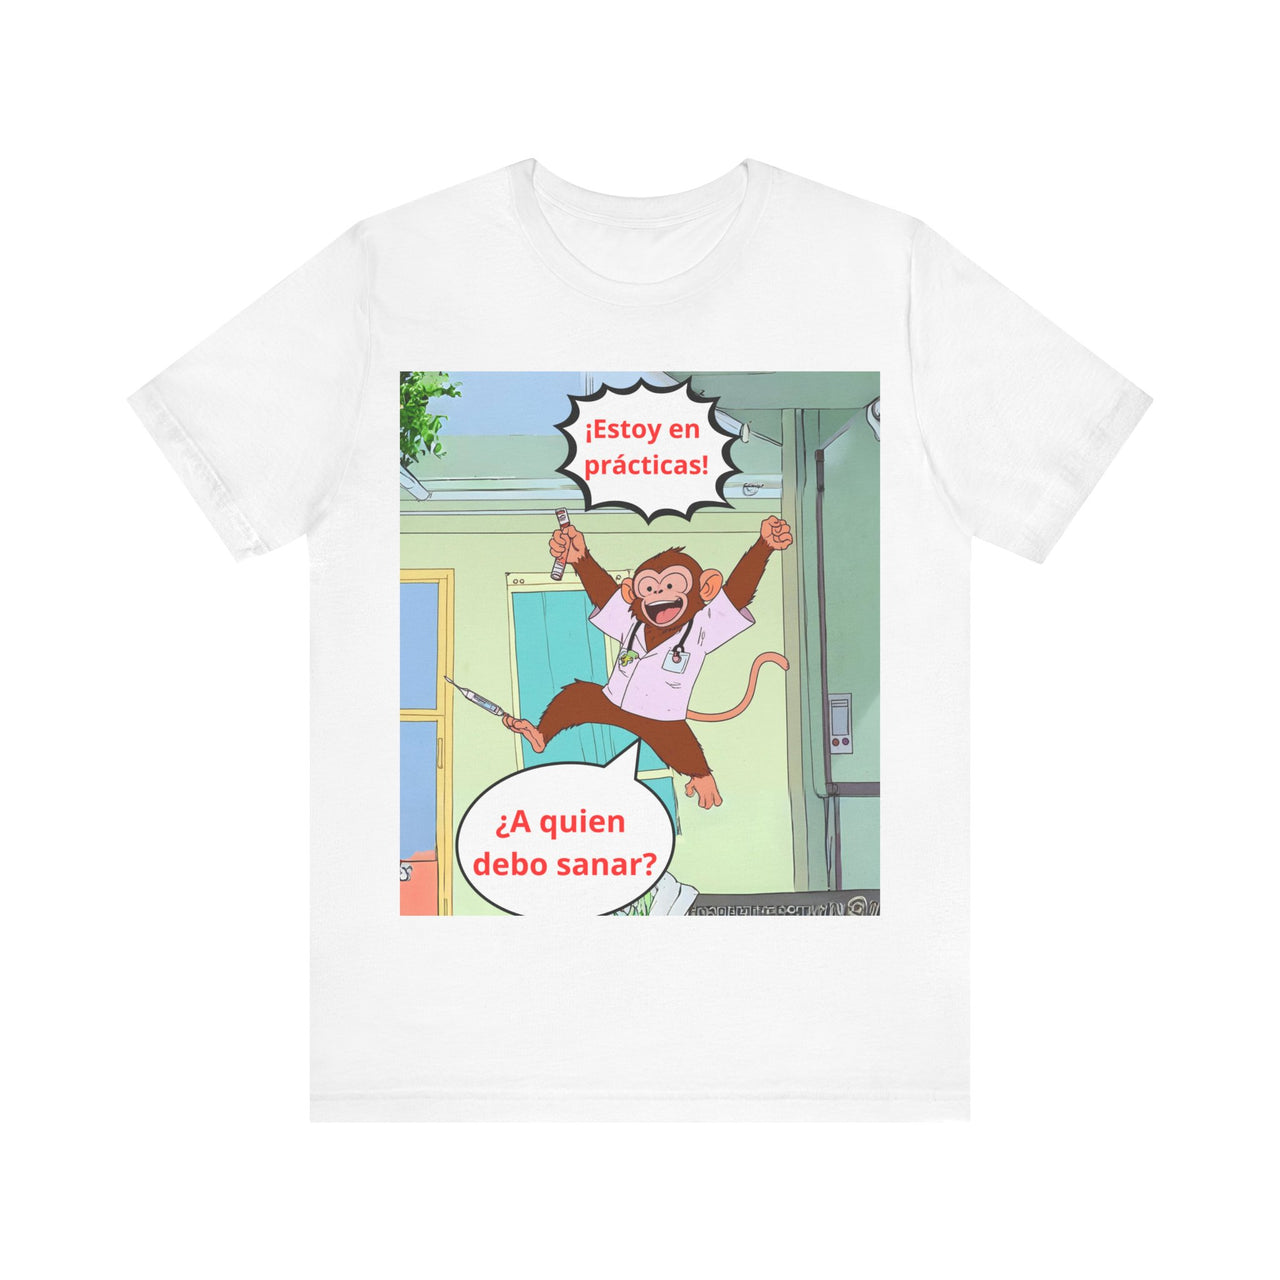 Camiseta Unisex "En prácticas", camiseta para médicos en prácticas, Camiseta medicina humor